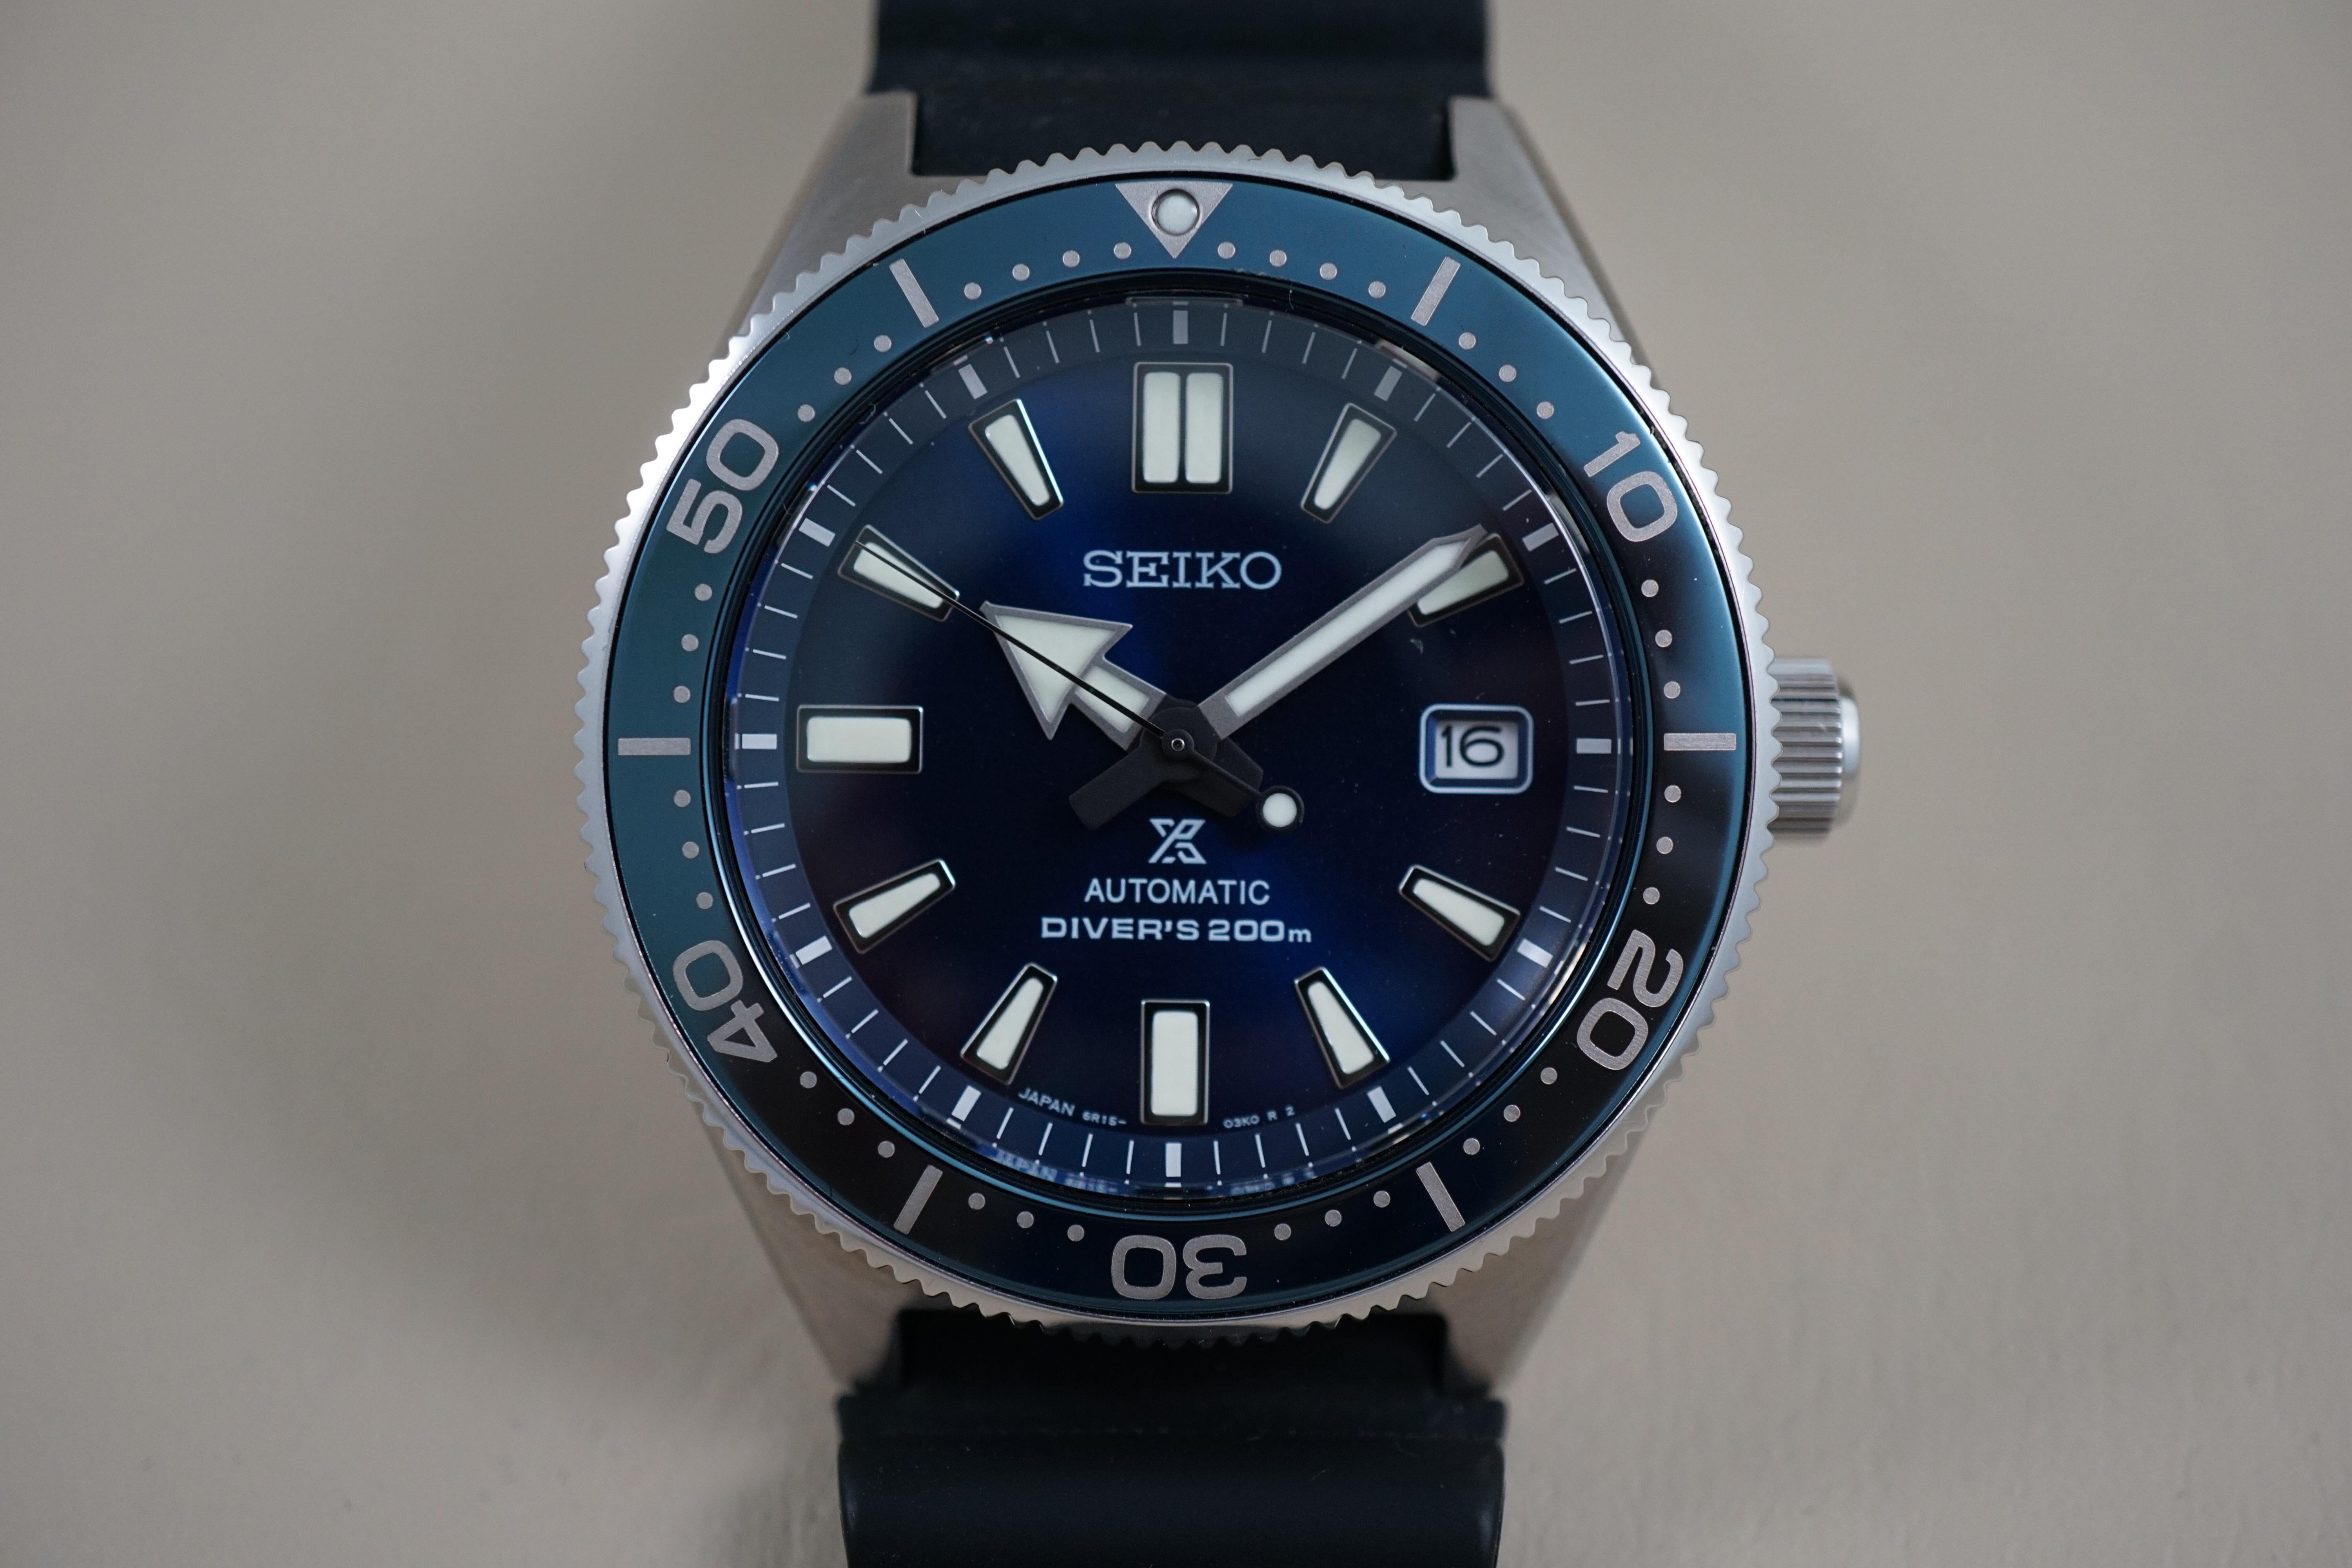 WTS] Seiko Prospex SBDC053 6R15 Blue 62Mas Automatic Divers - $450 WatchCharts